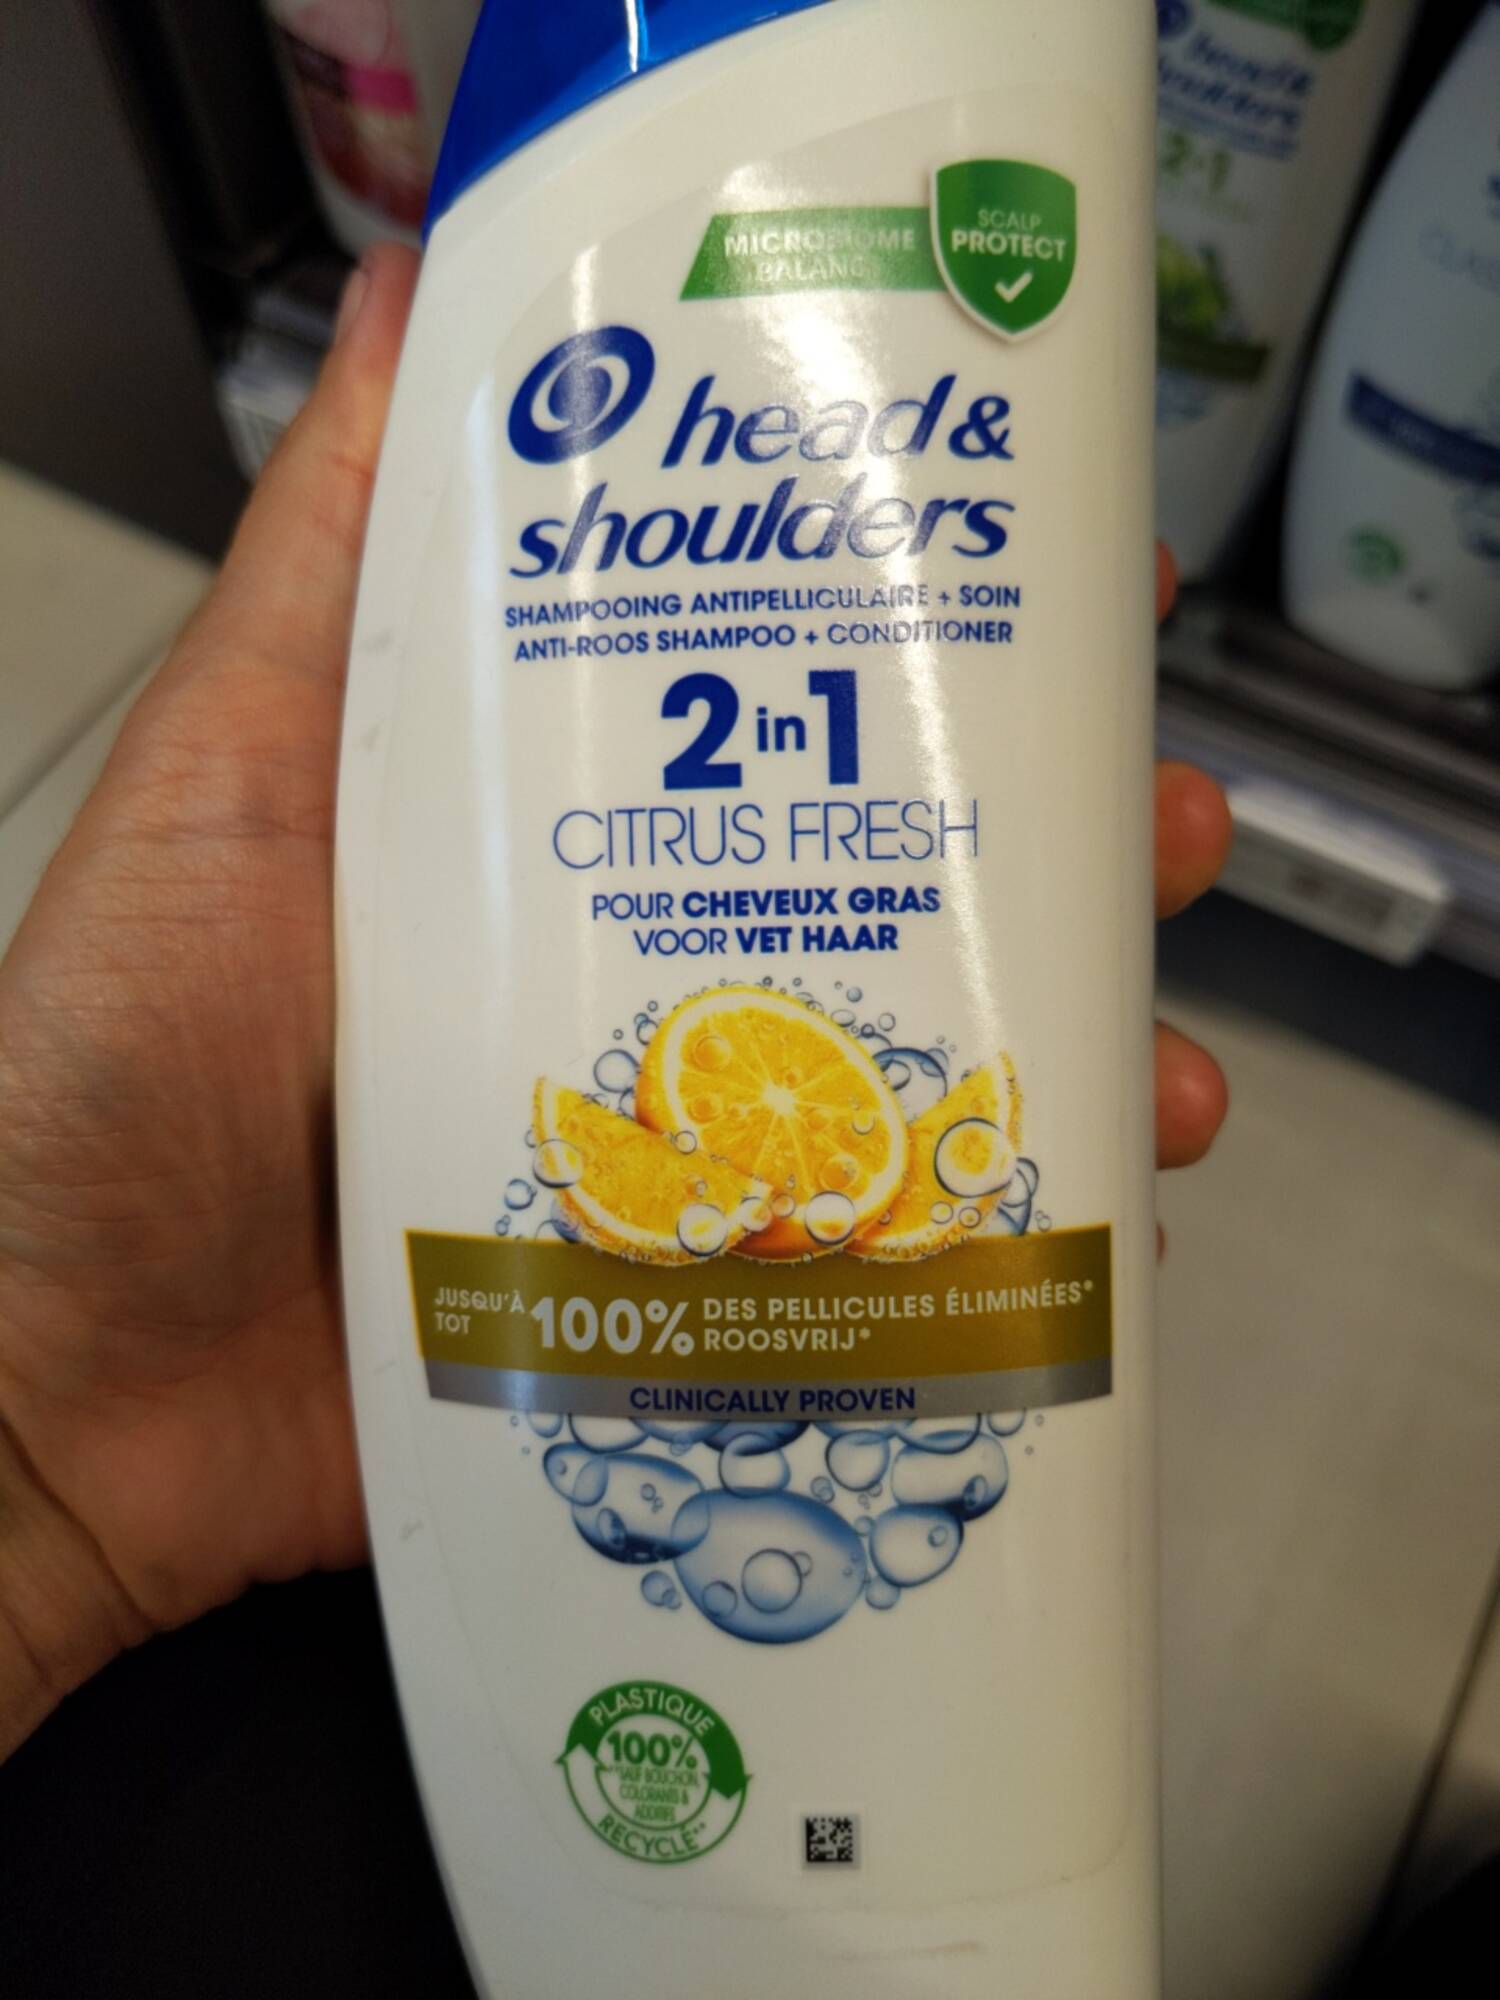 HEAD & SHOULDERS - 2 in 1 Citrus fresh - Shampooing antipellisuclaire + soin